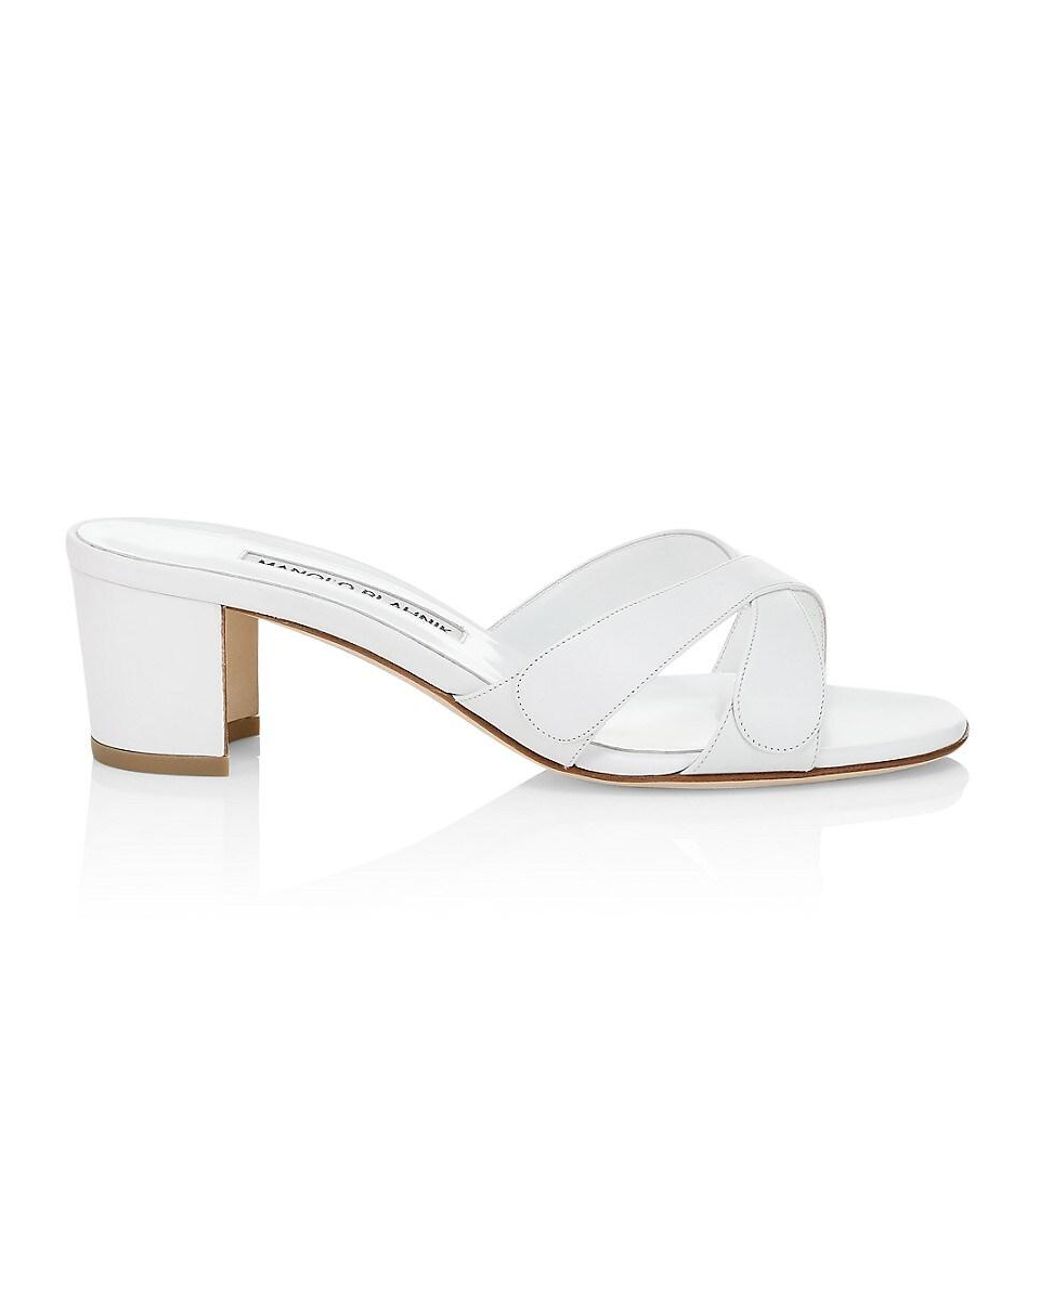 Manolo Blahnik Newton Leather Sandals in White | Lyst UK